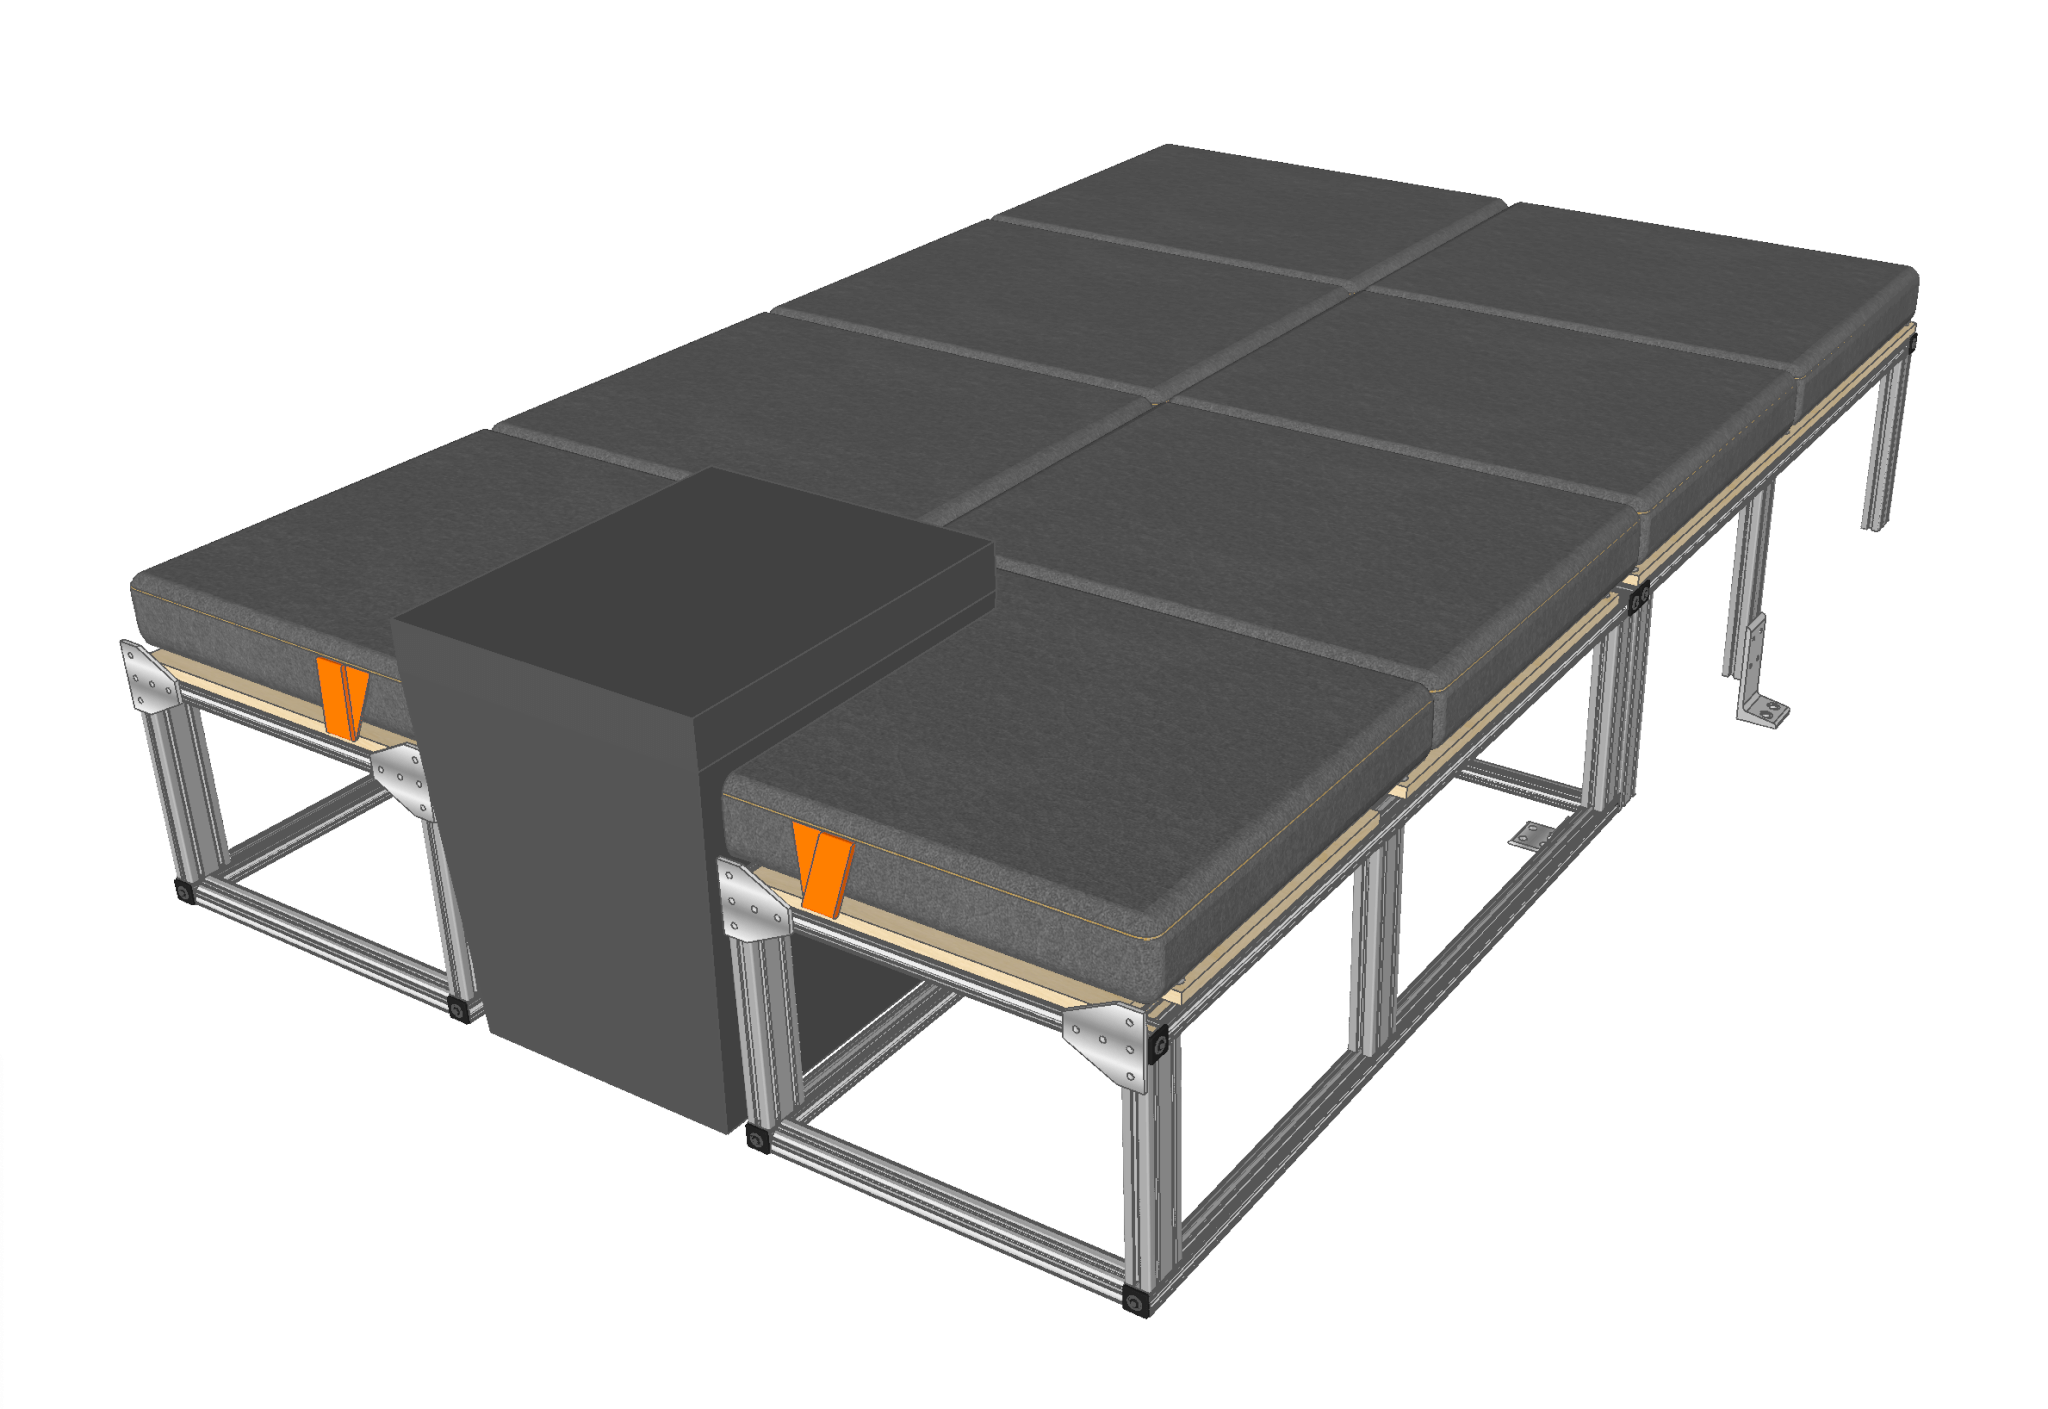 T-slot aluminum Transit Connect sleeping platform with folding mattresses